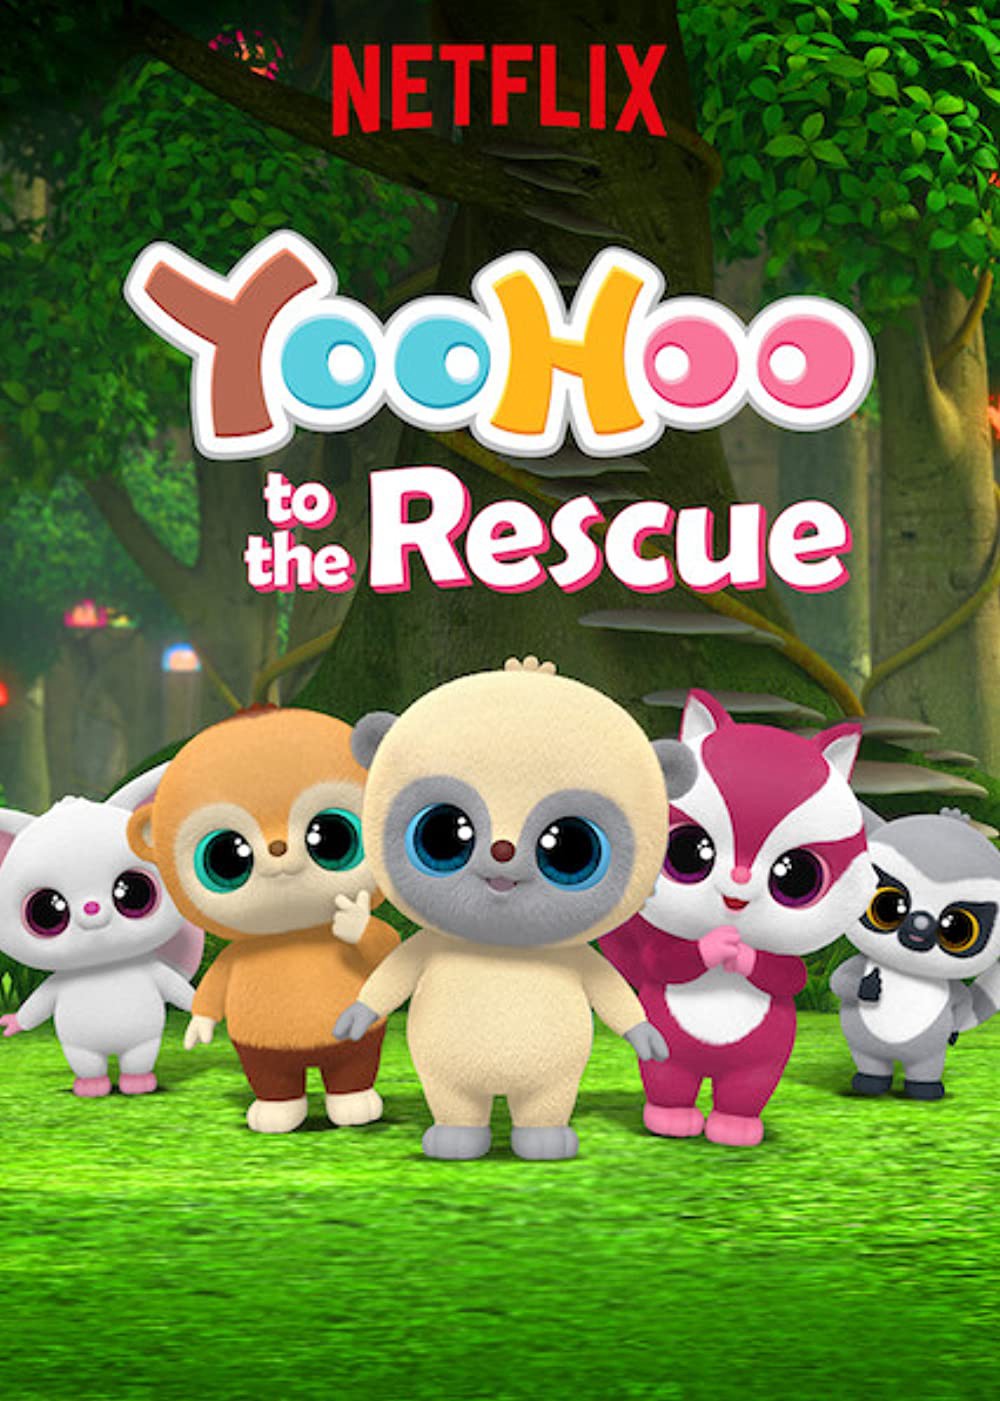 Yoohoo và biệt đội giải cứu (Phần 1) (YooHoo to the Rescue (Season 1)) [2019]